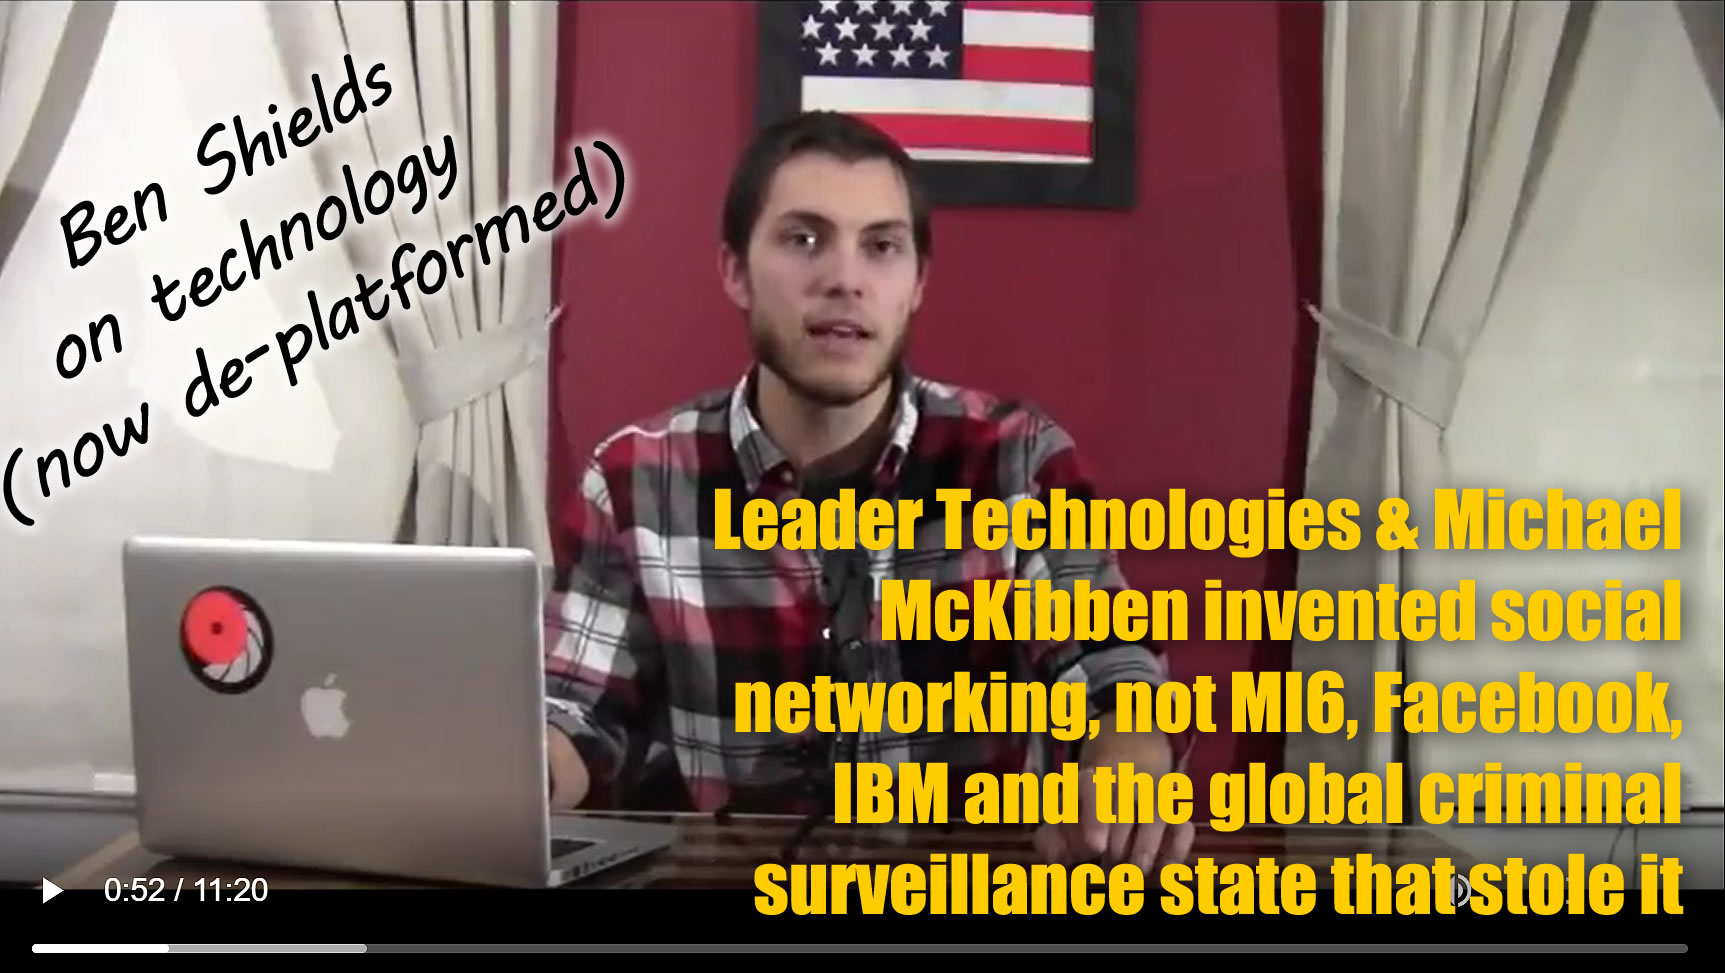 Ben Shields. (Nov. 26, 2017). Facebook, IBM, MI6 and DARPA did not invent social networking, Leader Technologies and Michael McKibben did. Ben Shields on technology (now de-platformed).